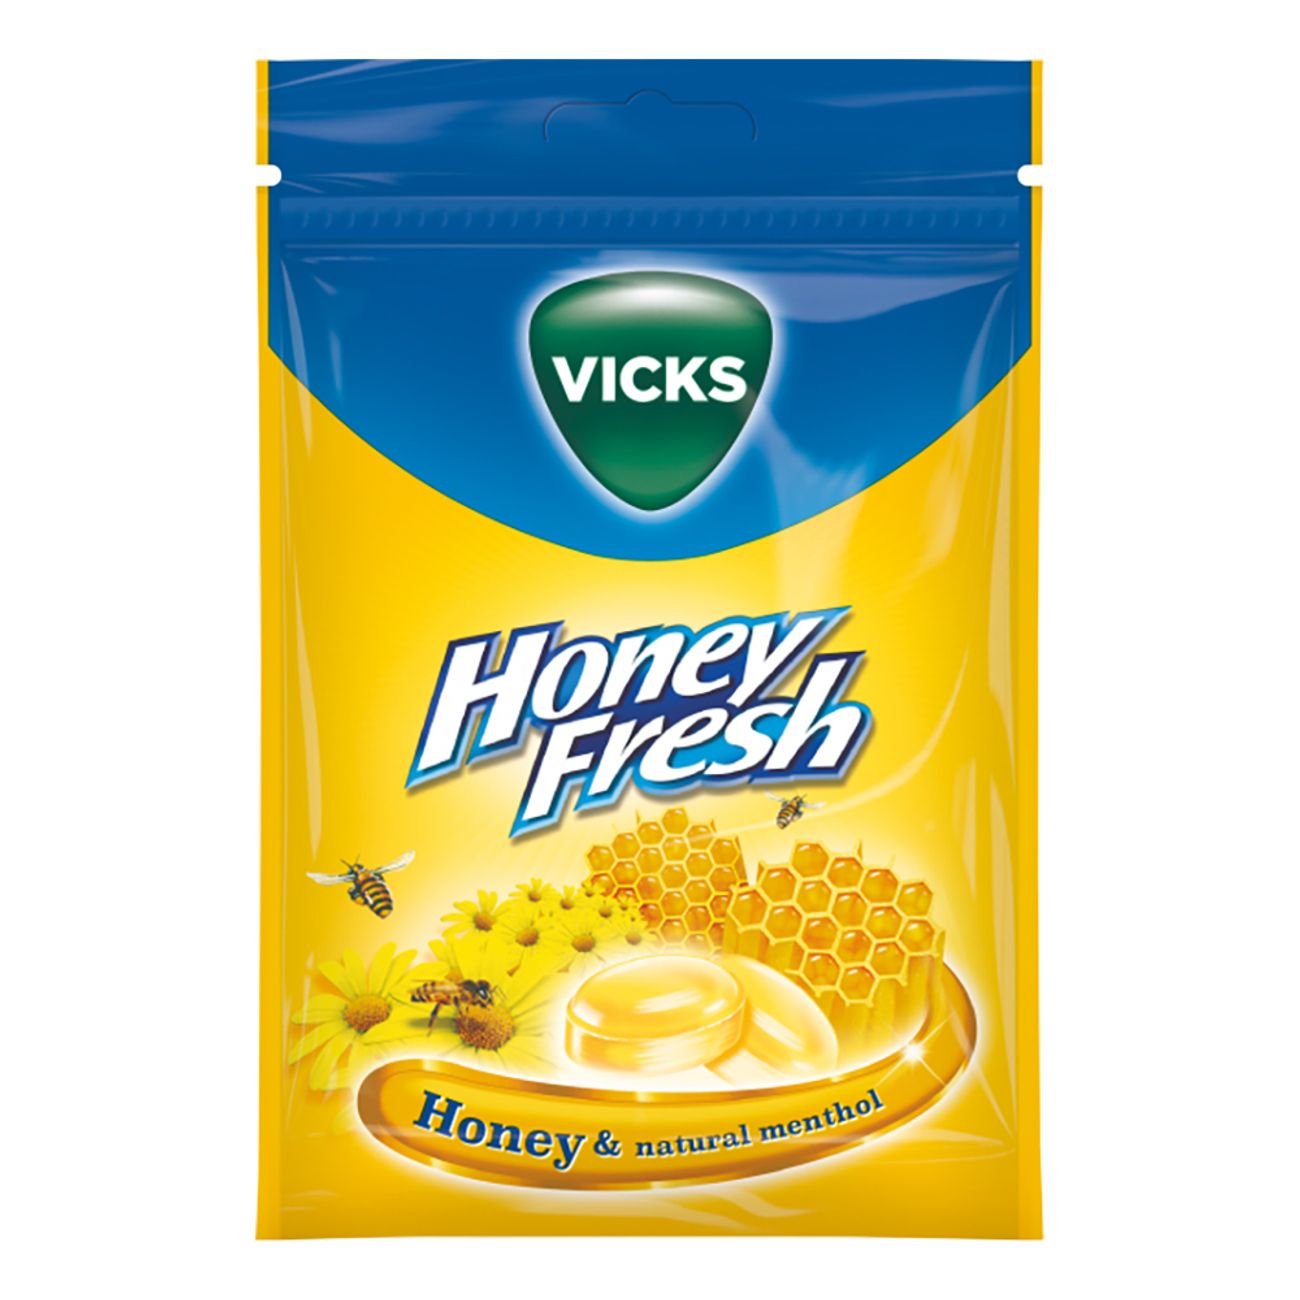 vicks-honey-fresh-halstabletter-74125-2